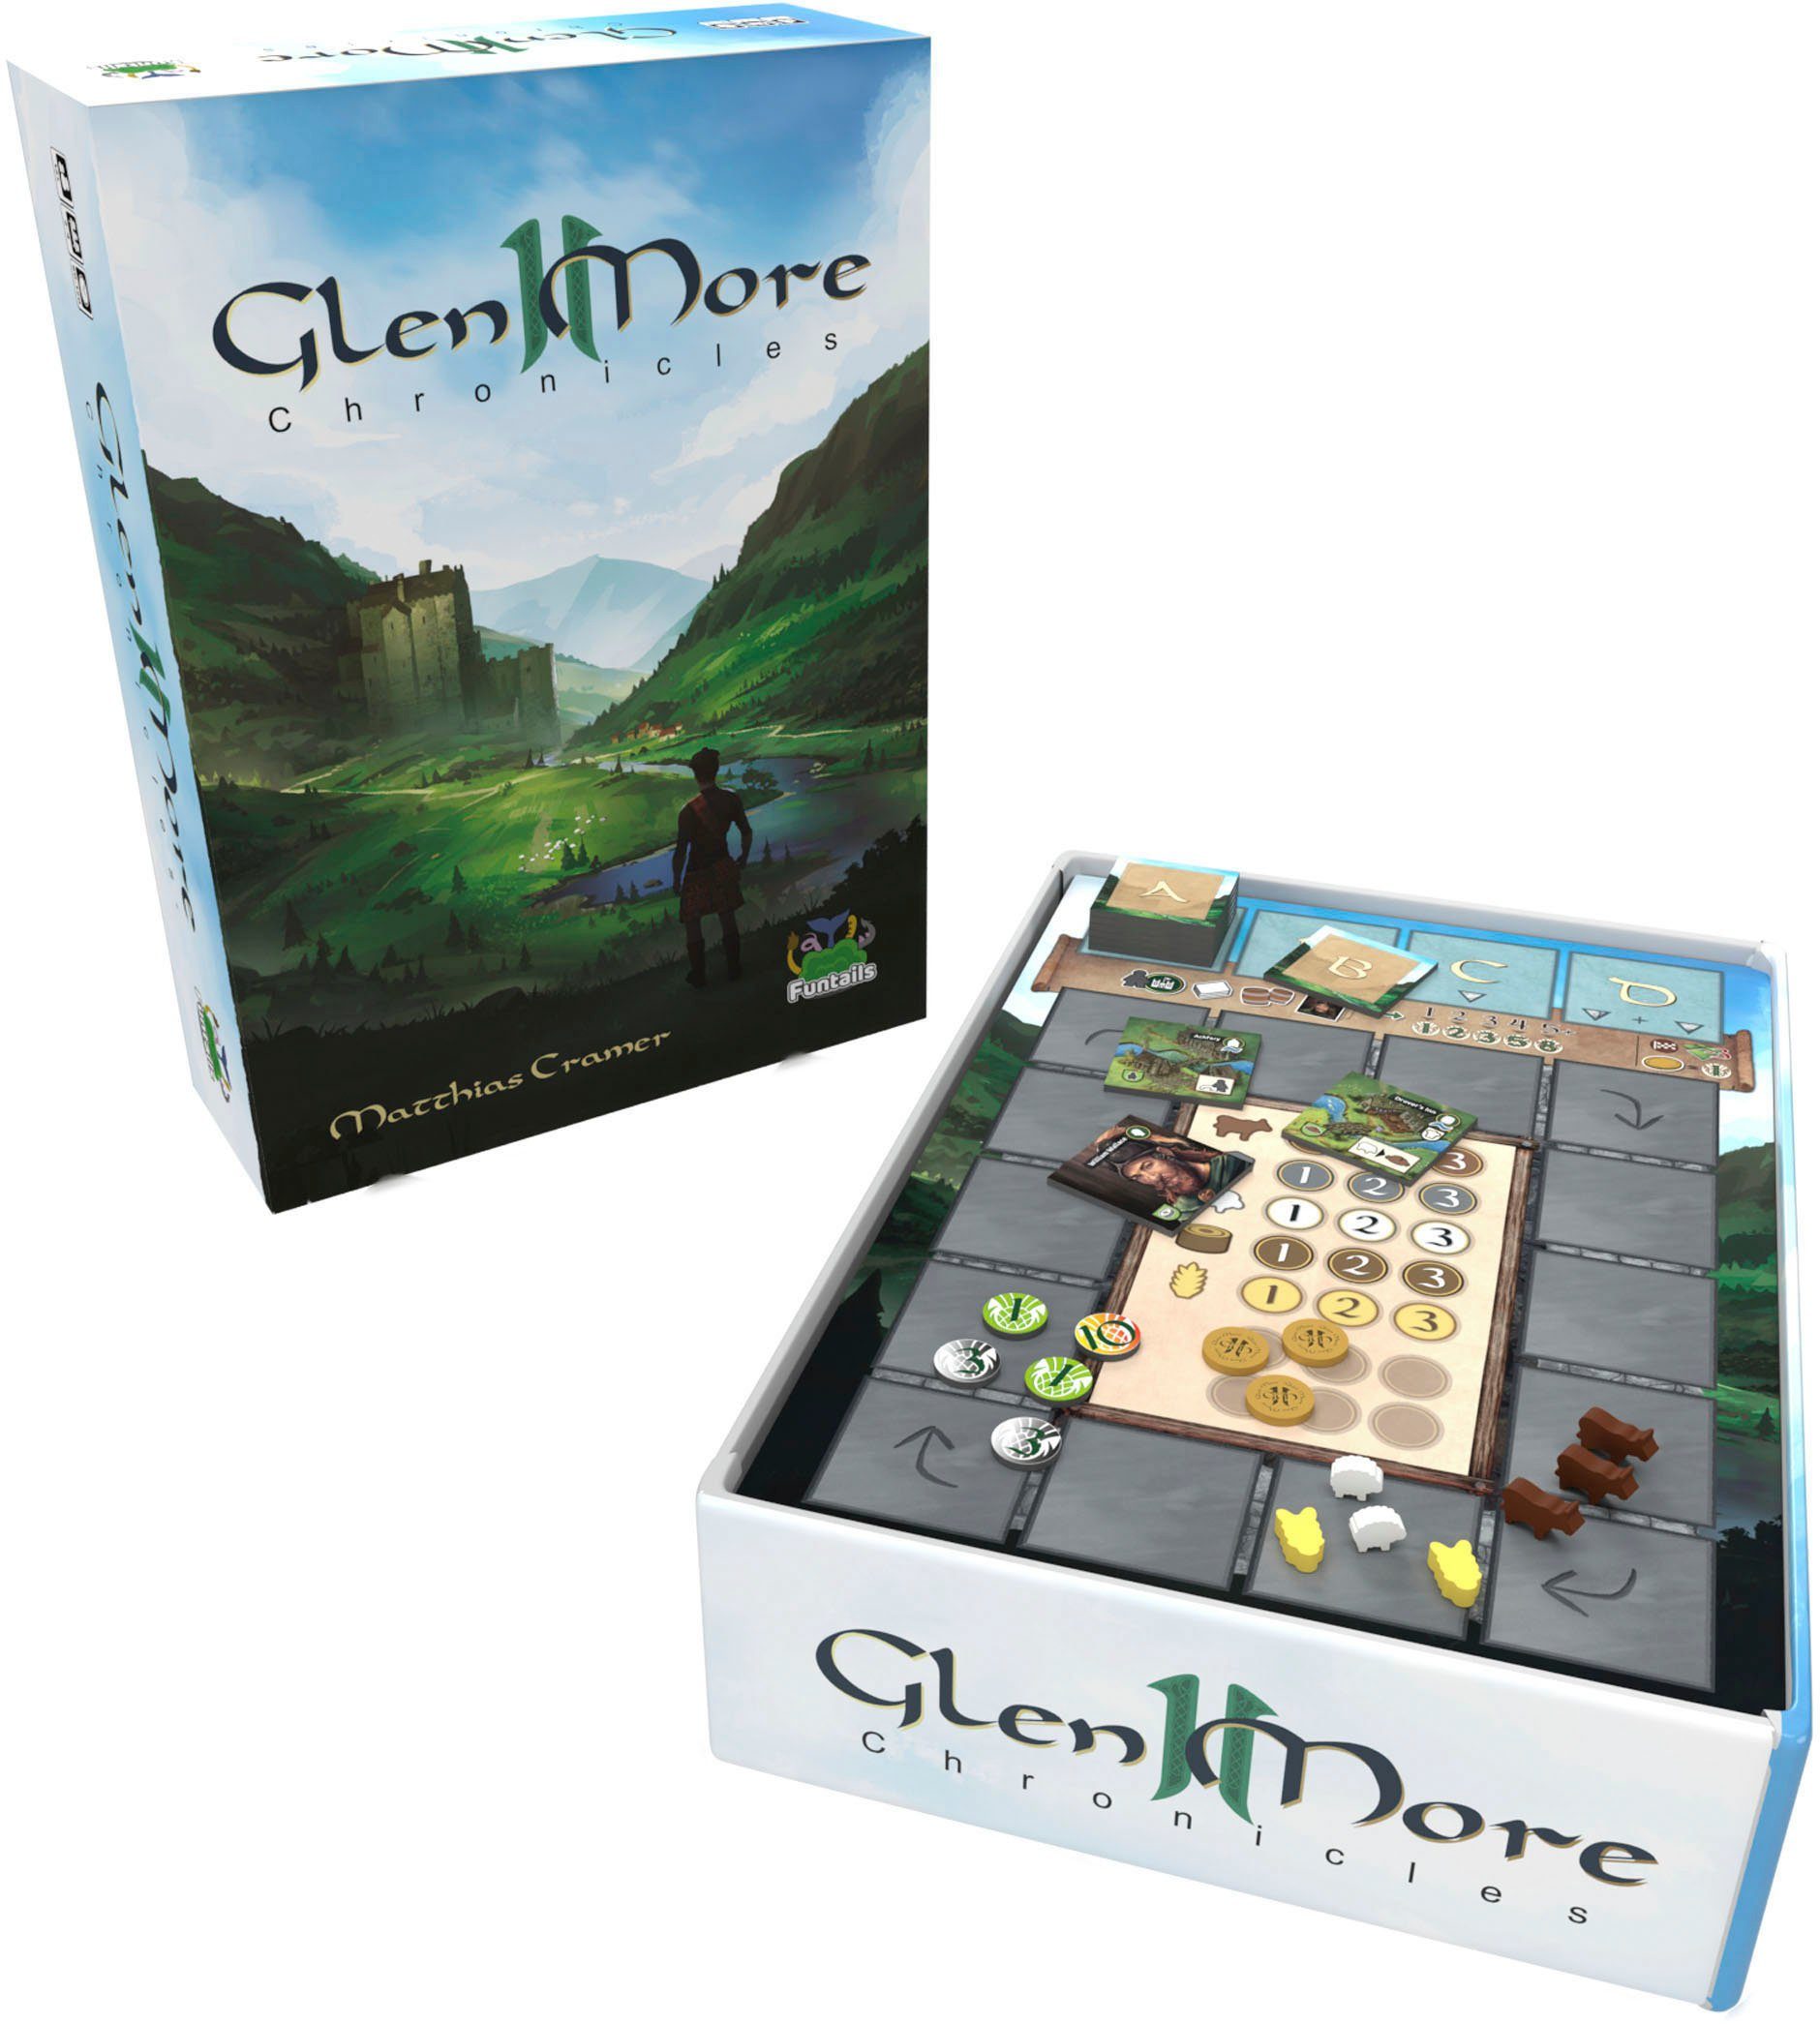 II: Chronicles More Funtails Spiel, Glen Strategiespiel